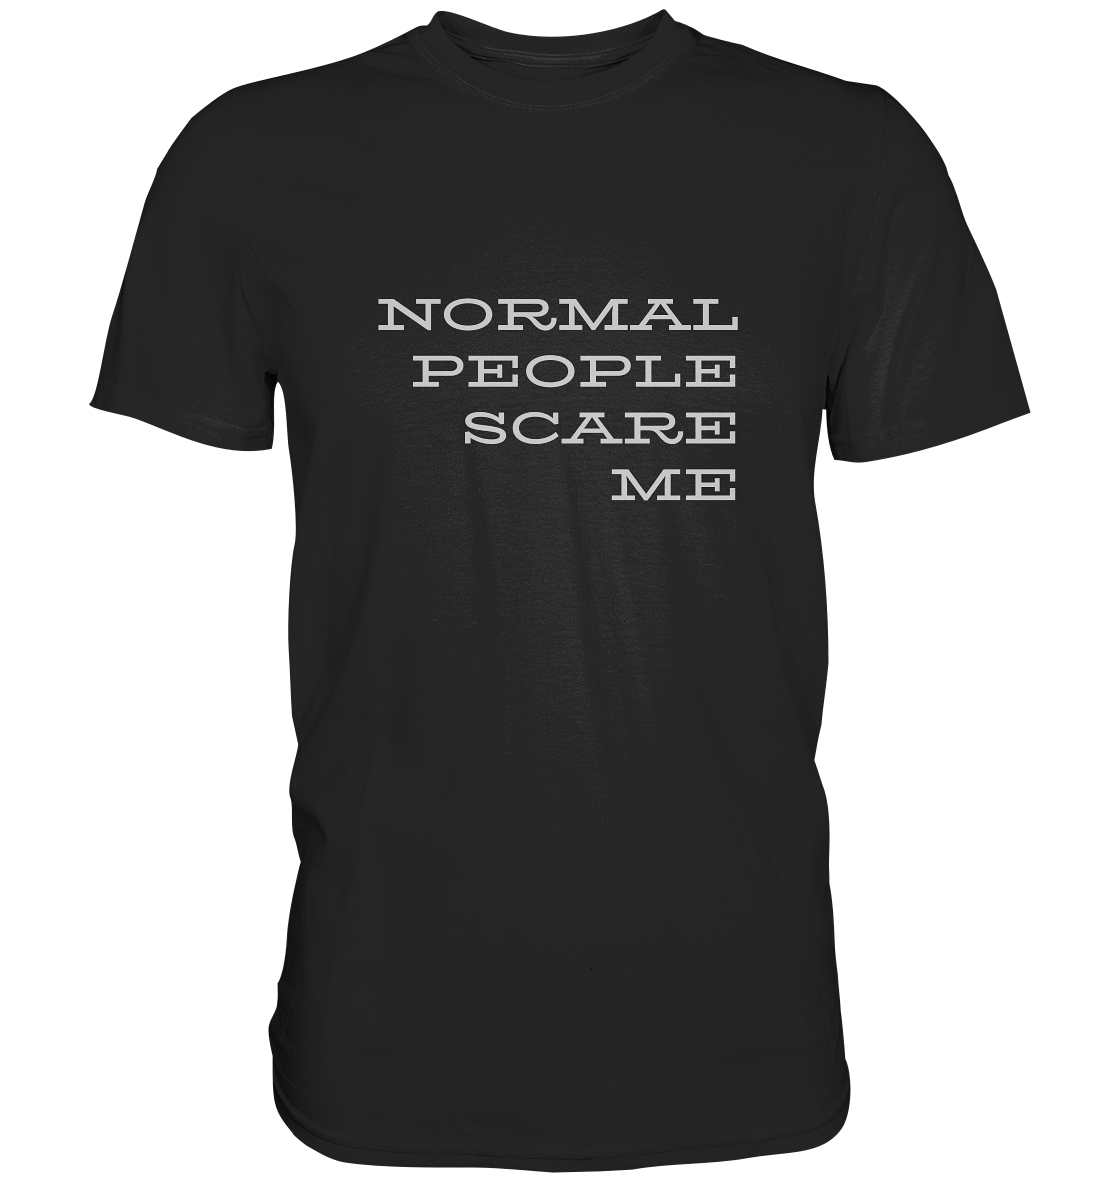 Herren-T-Shirt mit Aufdruck "Normal people scare me", schwarz